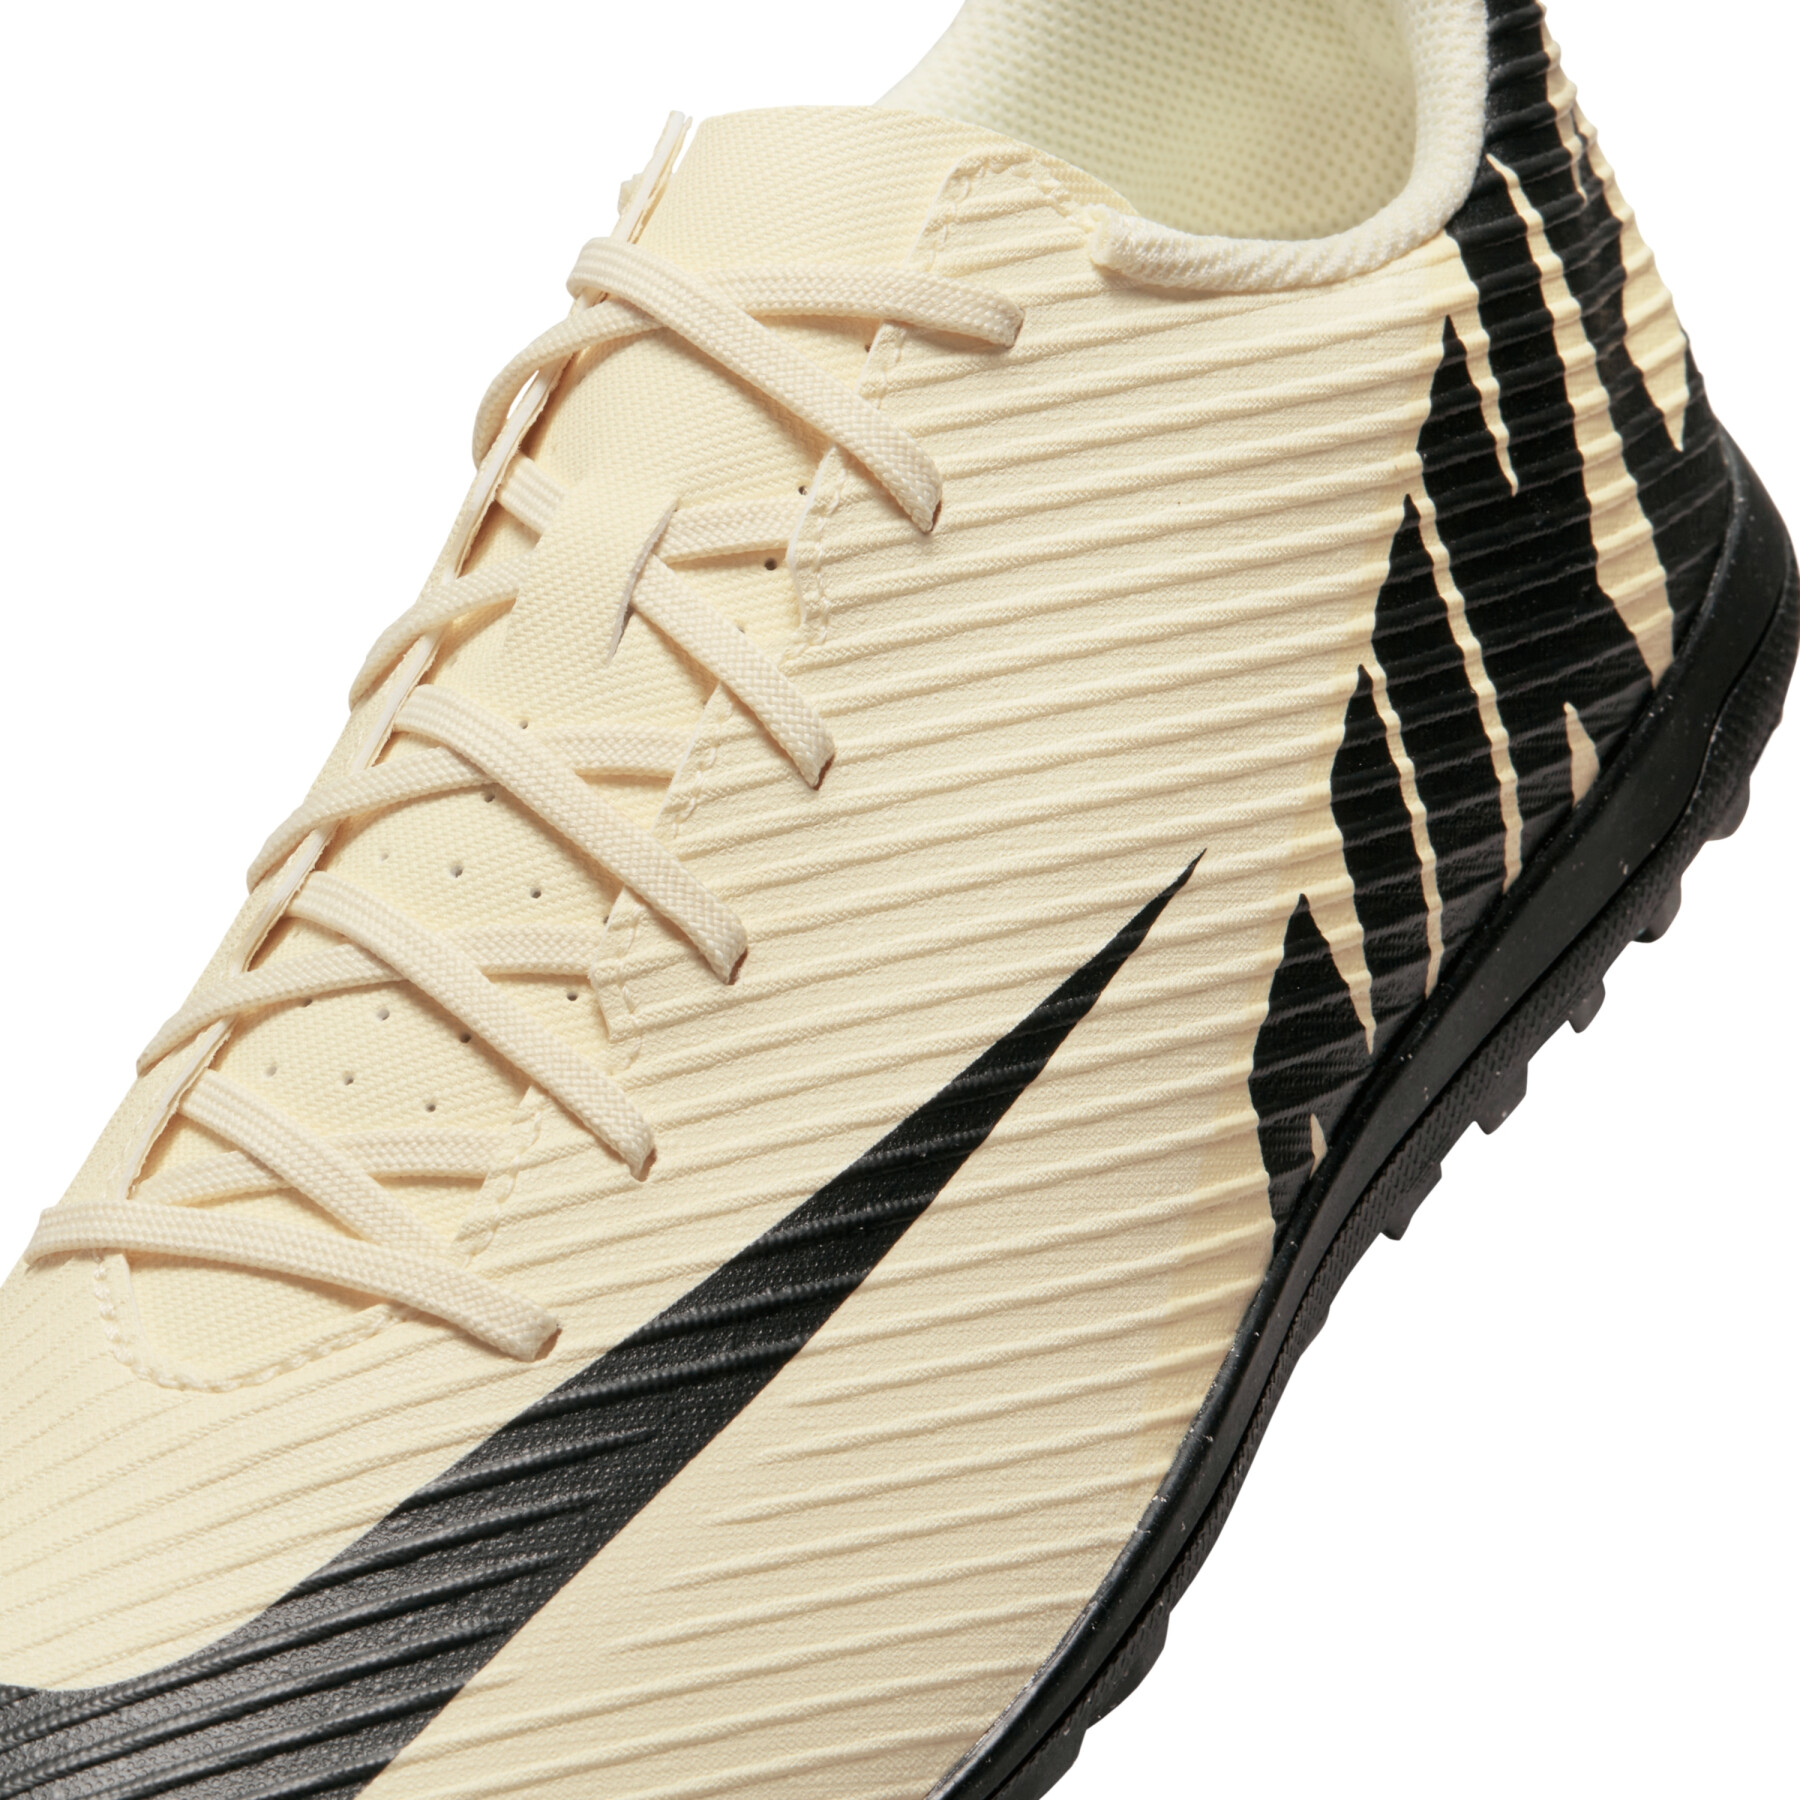 Soccer shoes Nike Mercurial Vapor 15 Club TF